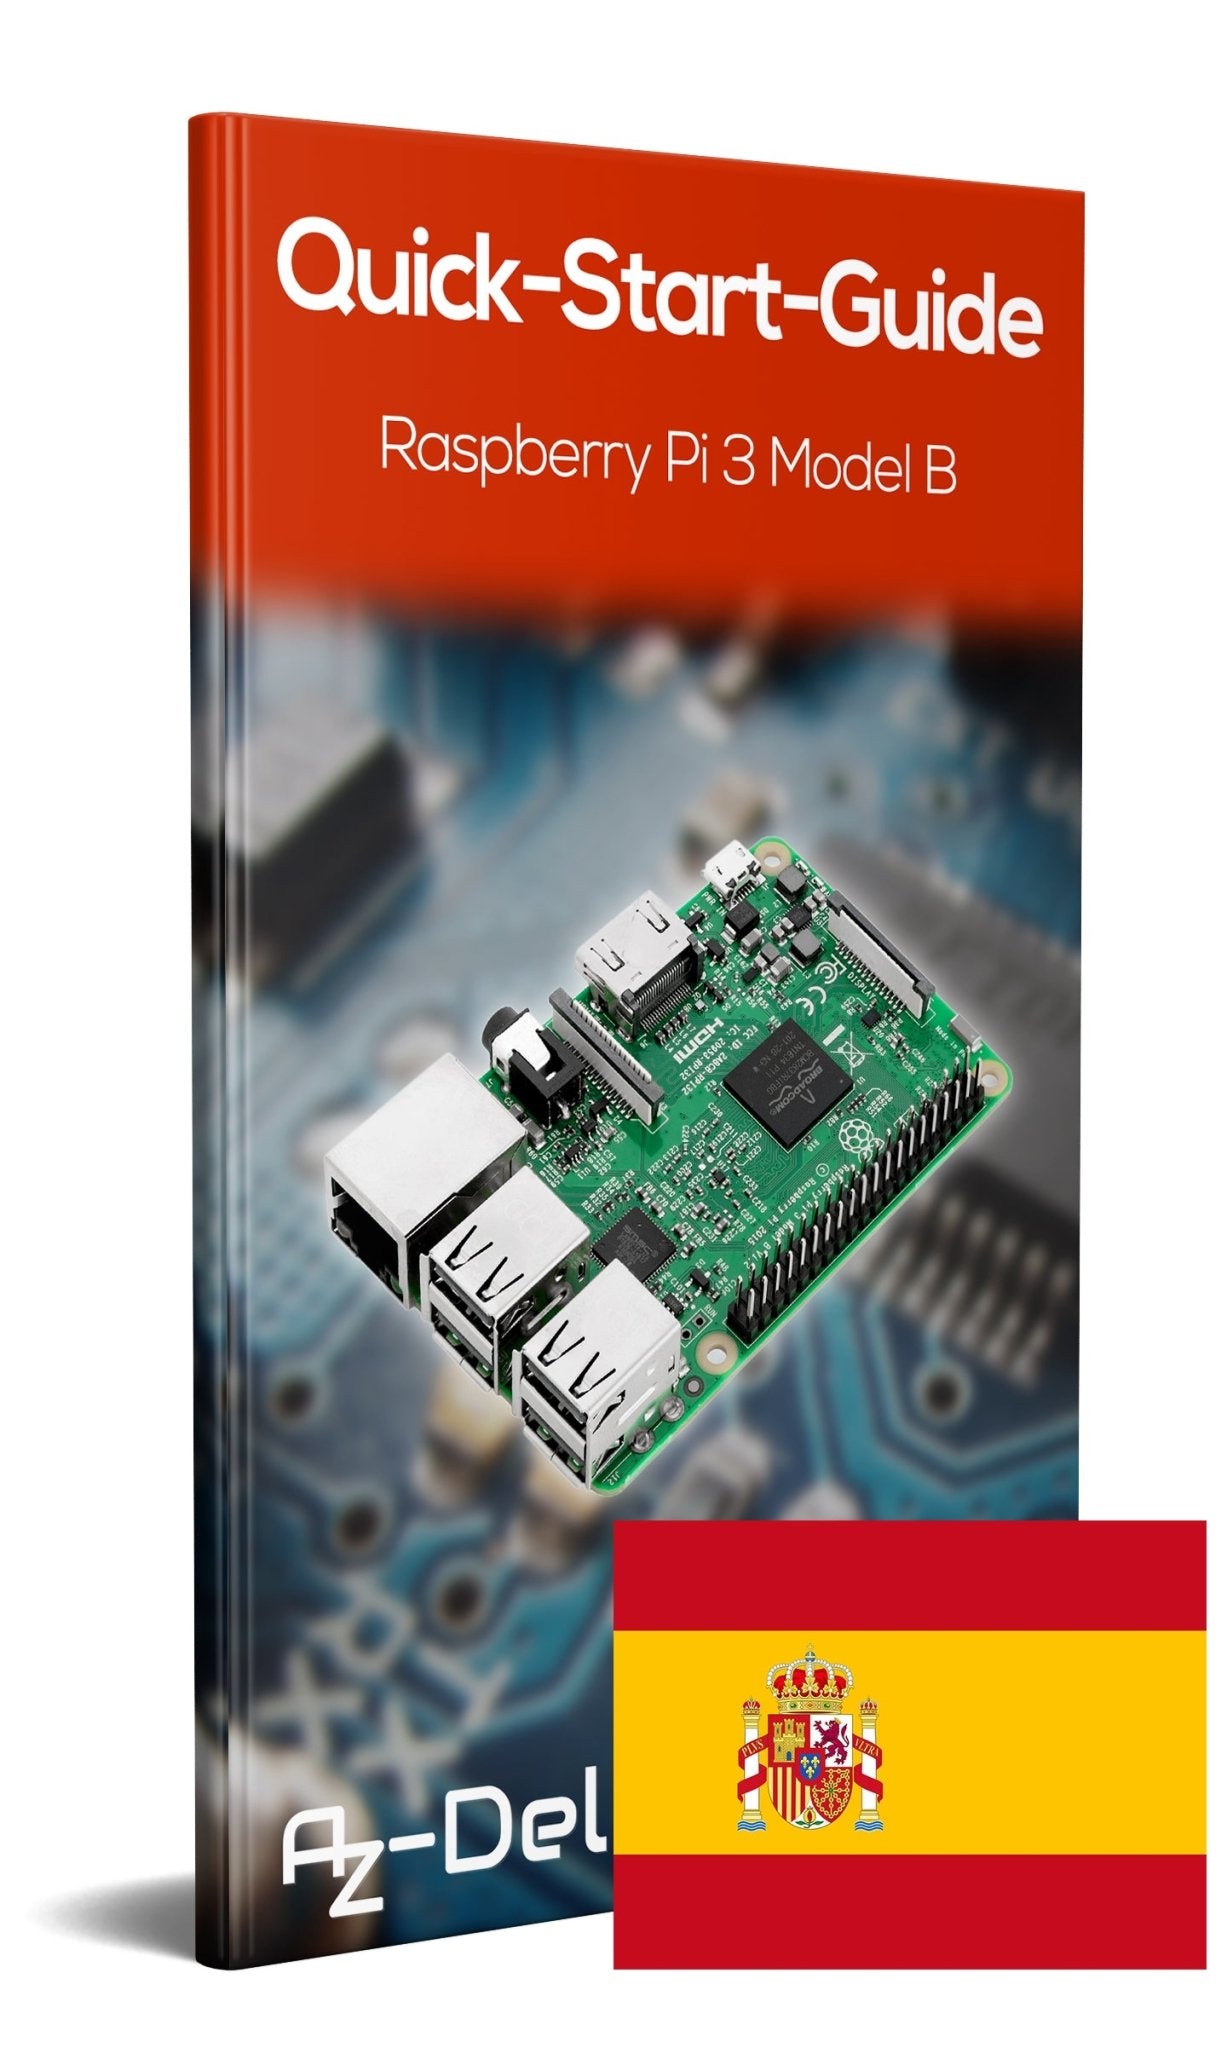 Raspberry Pi 3 Model B - AZ-Delivery